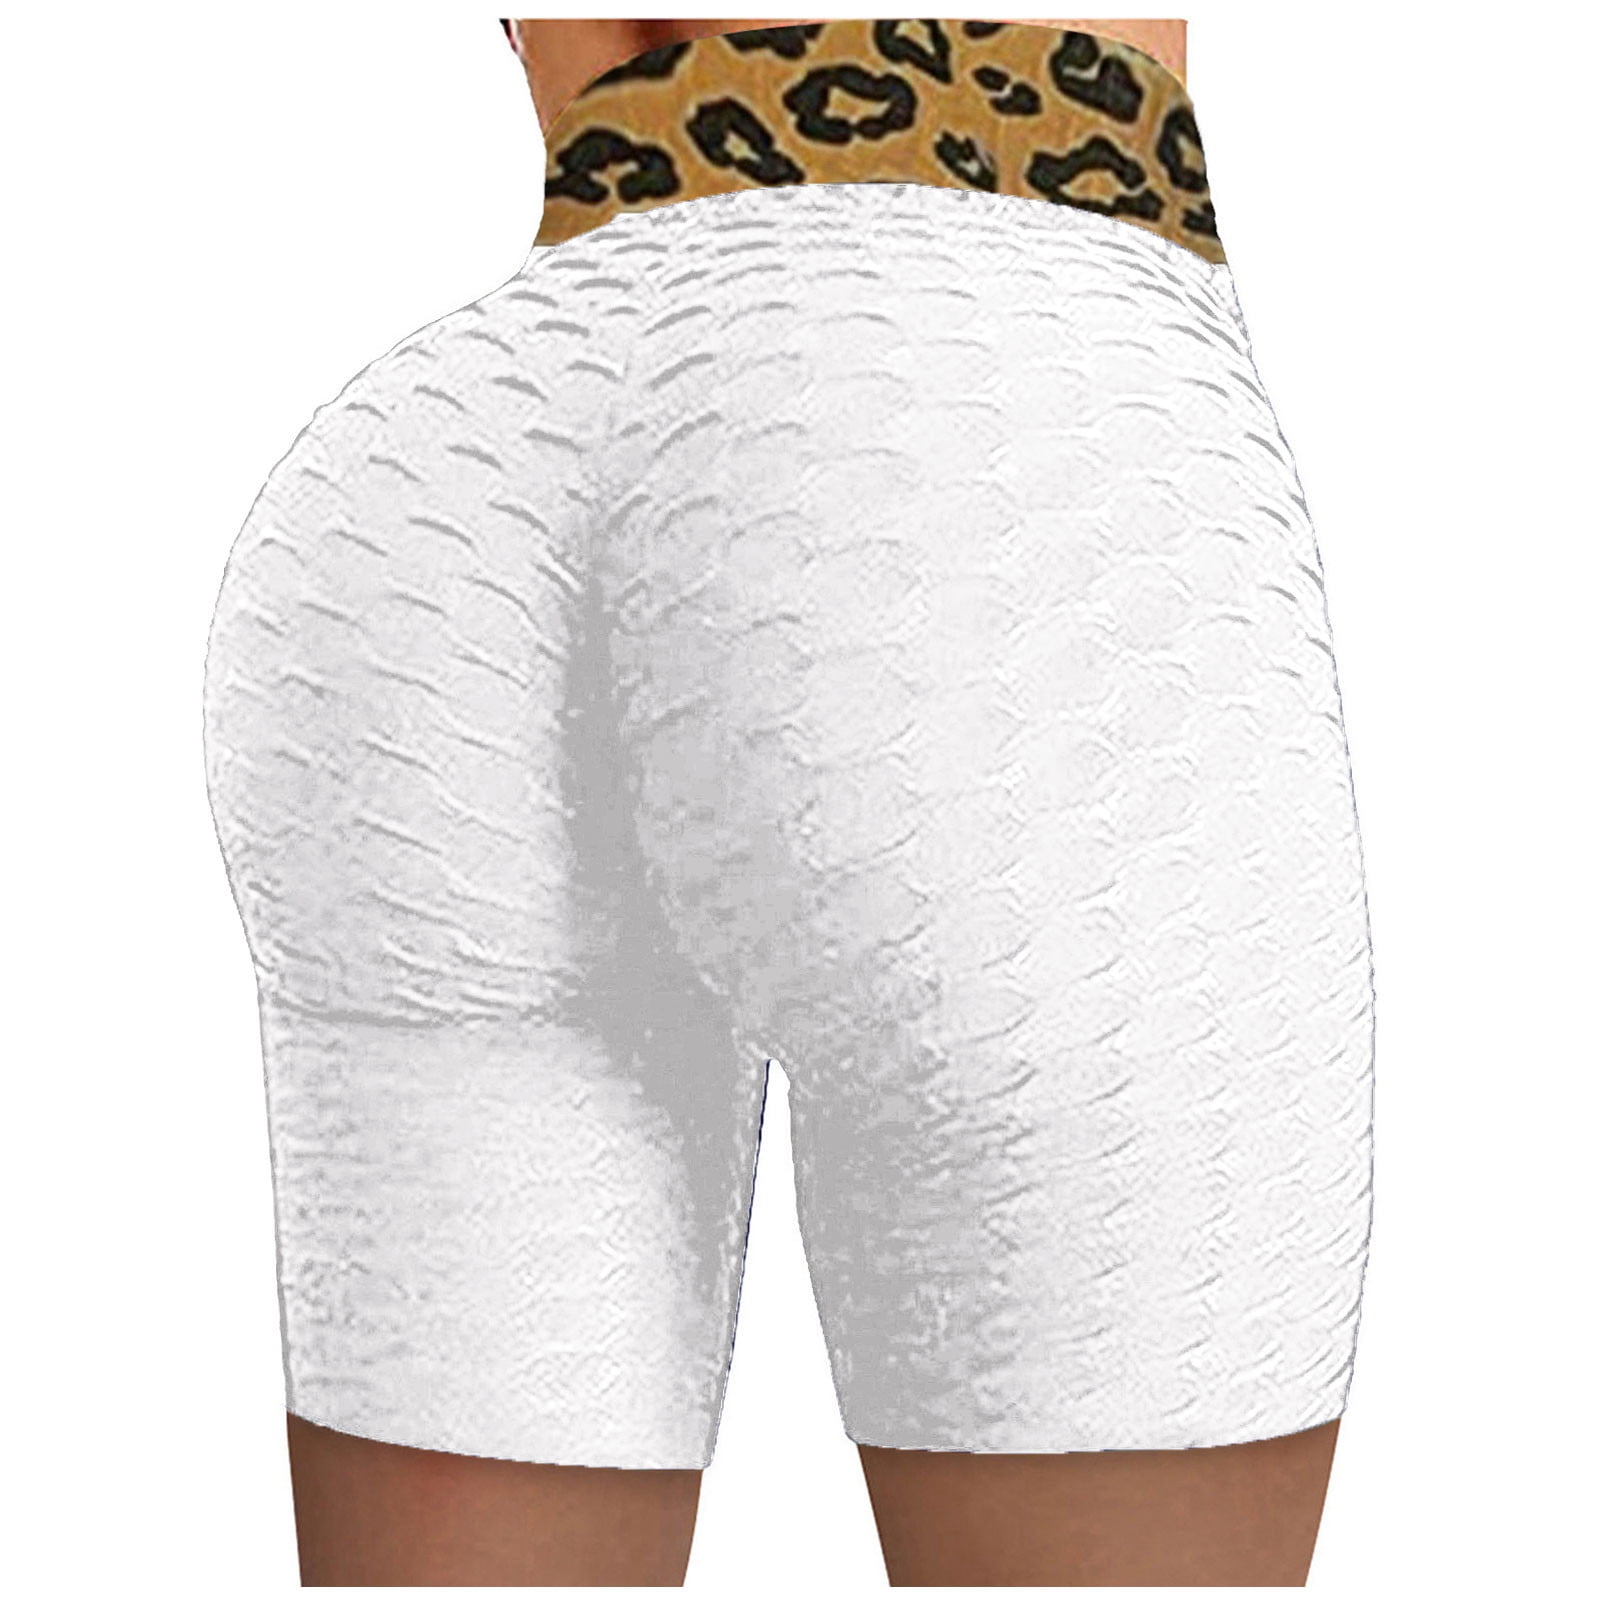 Puntoco Women'S Clearance Yoga Pants Basic Slip Bike Shorts Compression ...